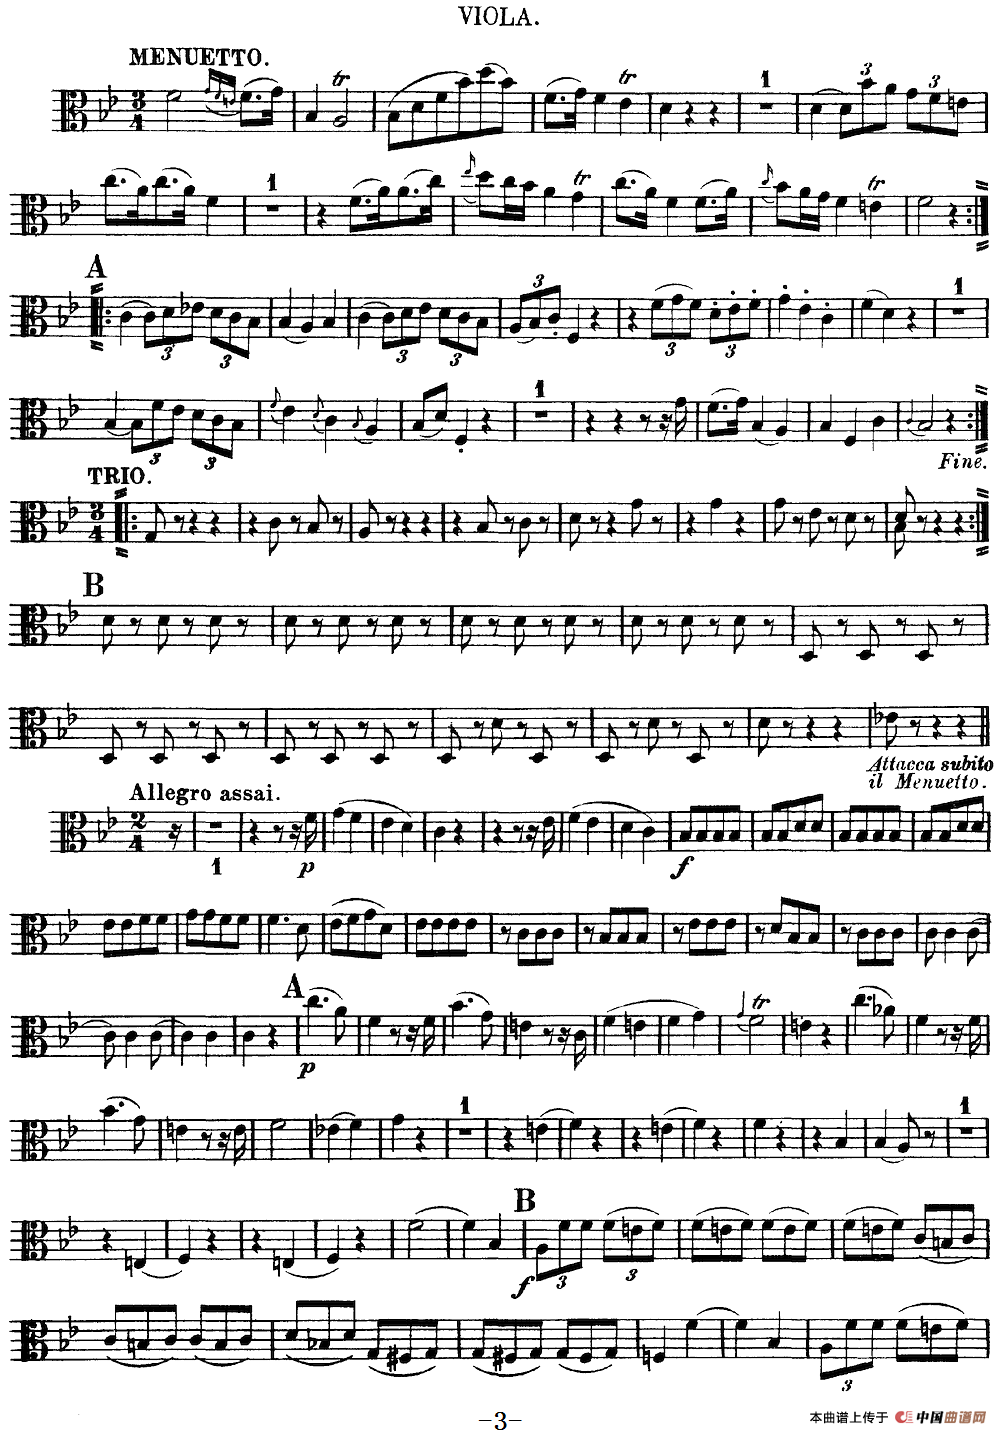 Mozart《Quartet No.12 in Bb Major,K.172》（Viola分谱）